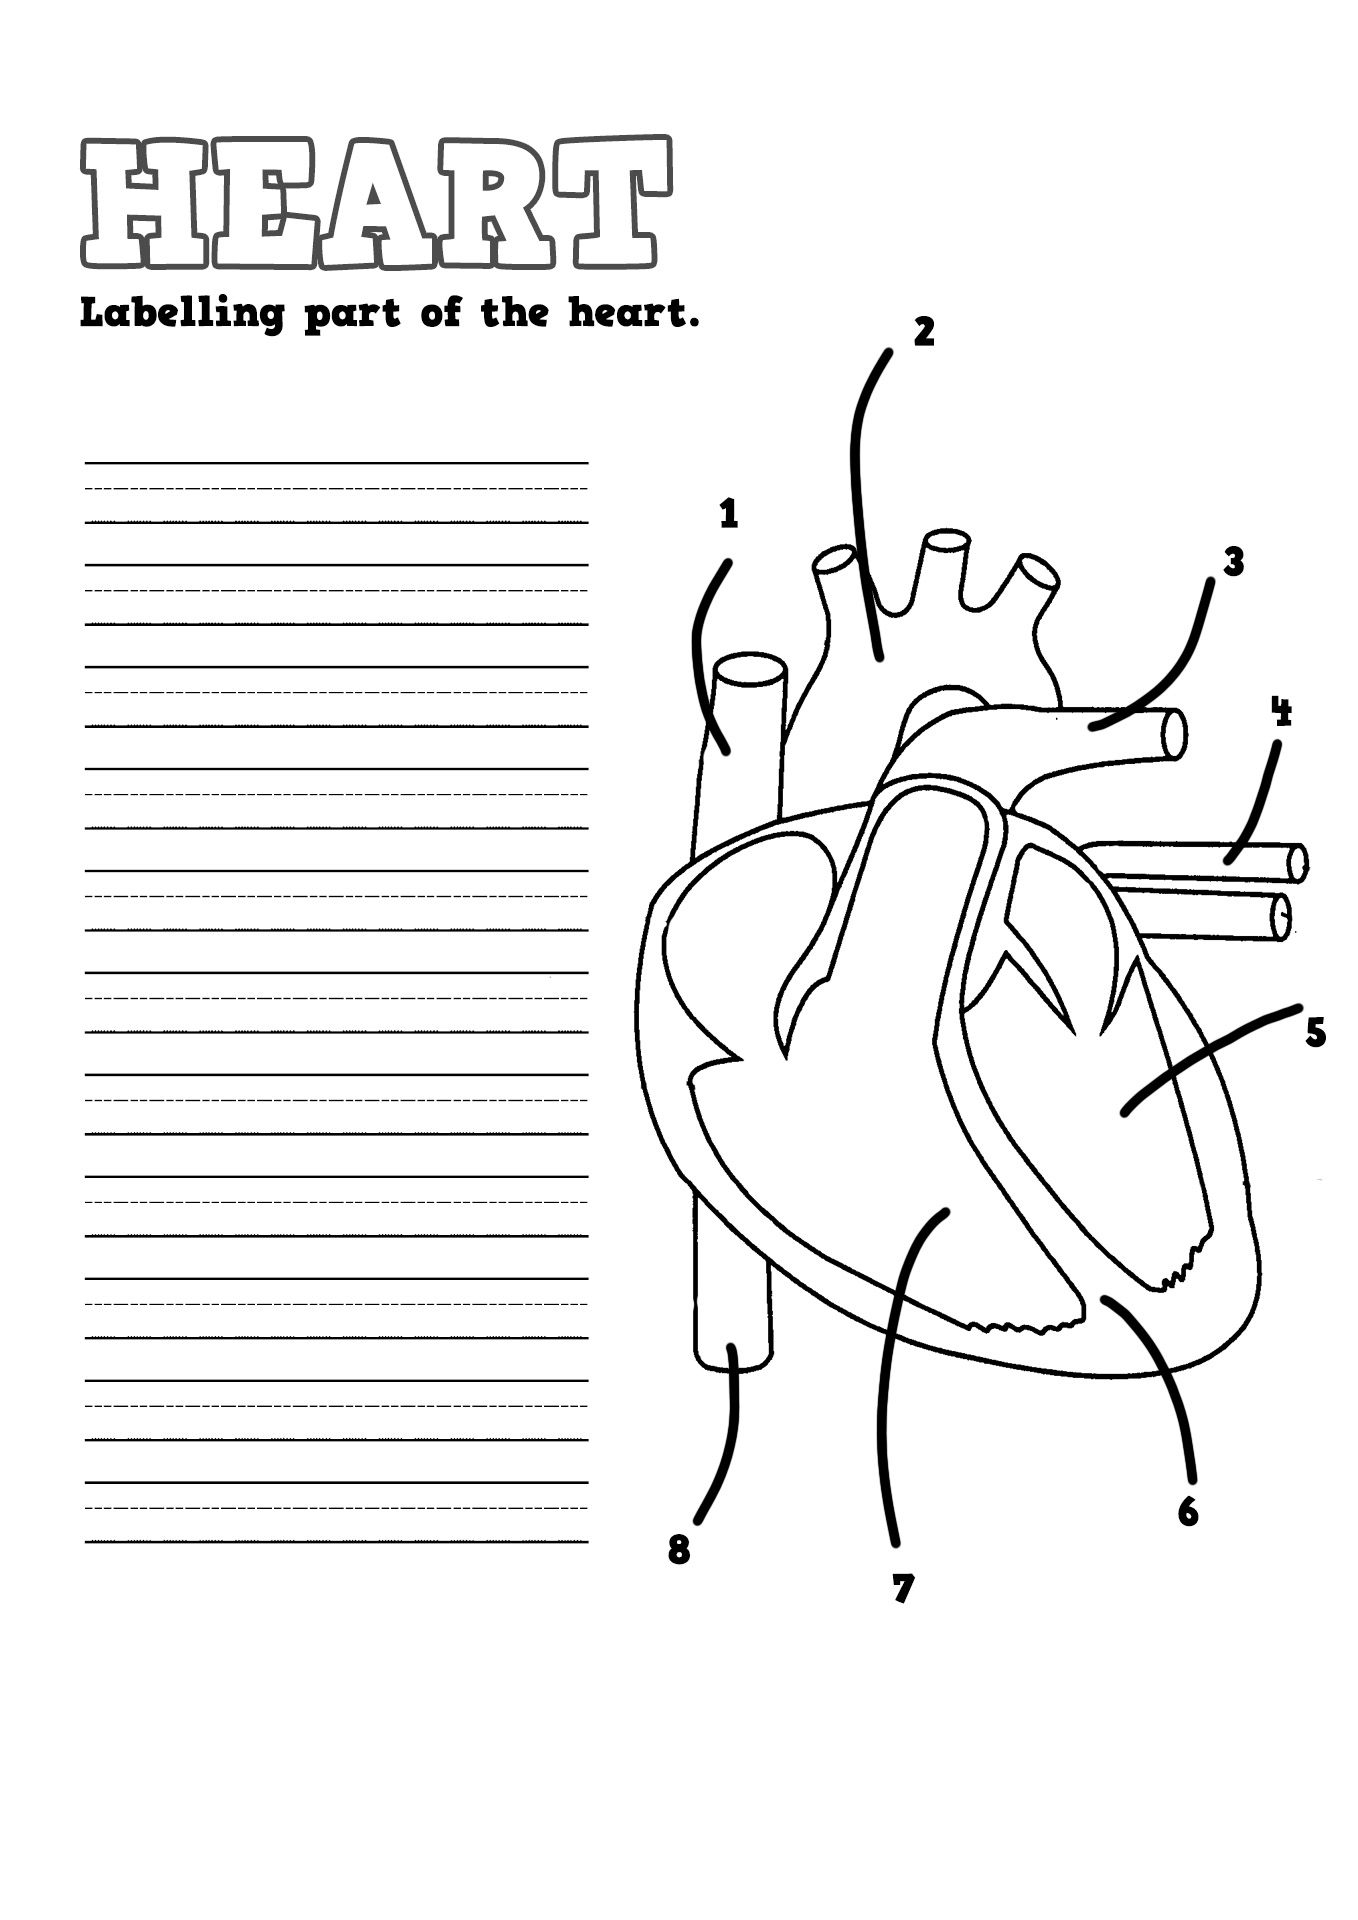 Human Body Diagram Heart Image